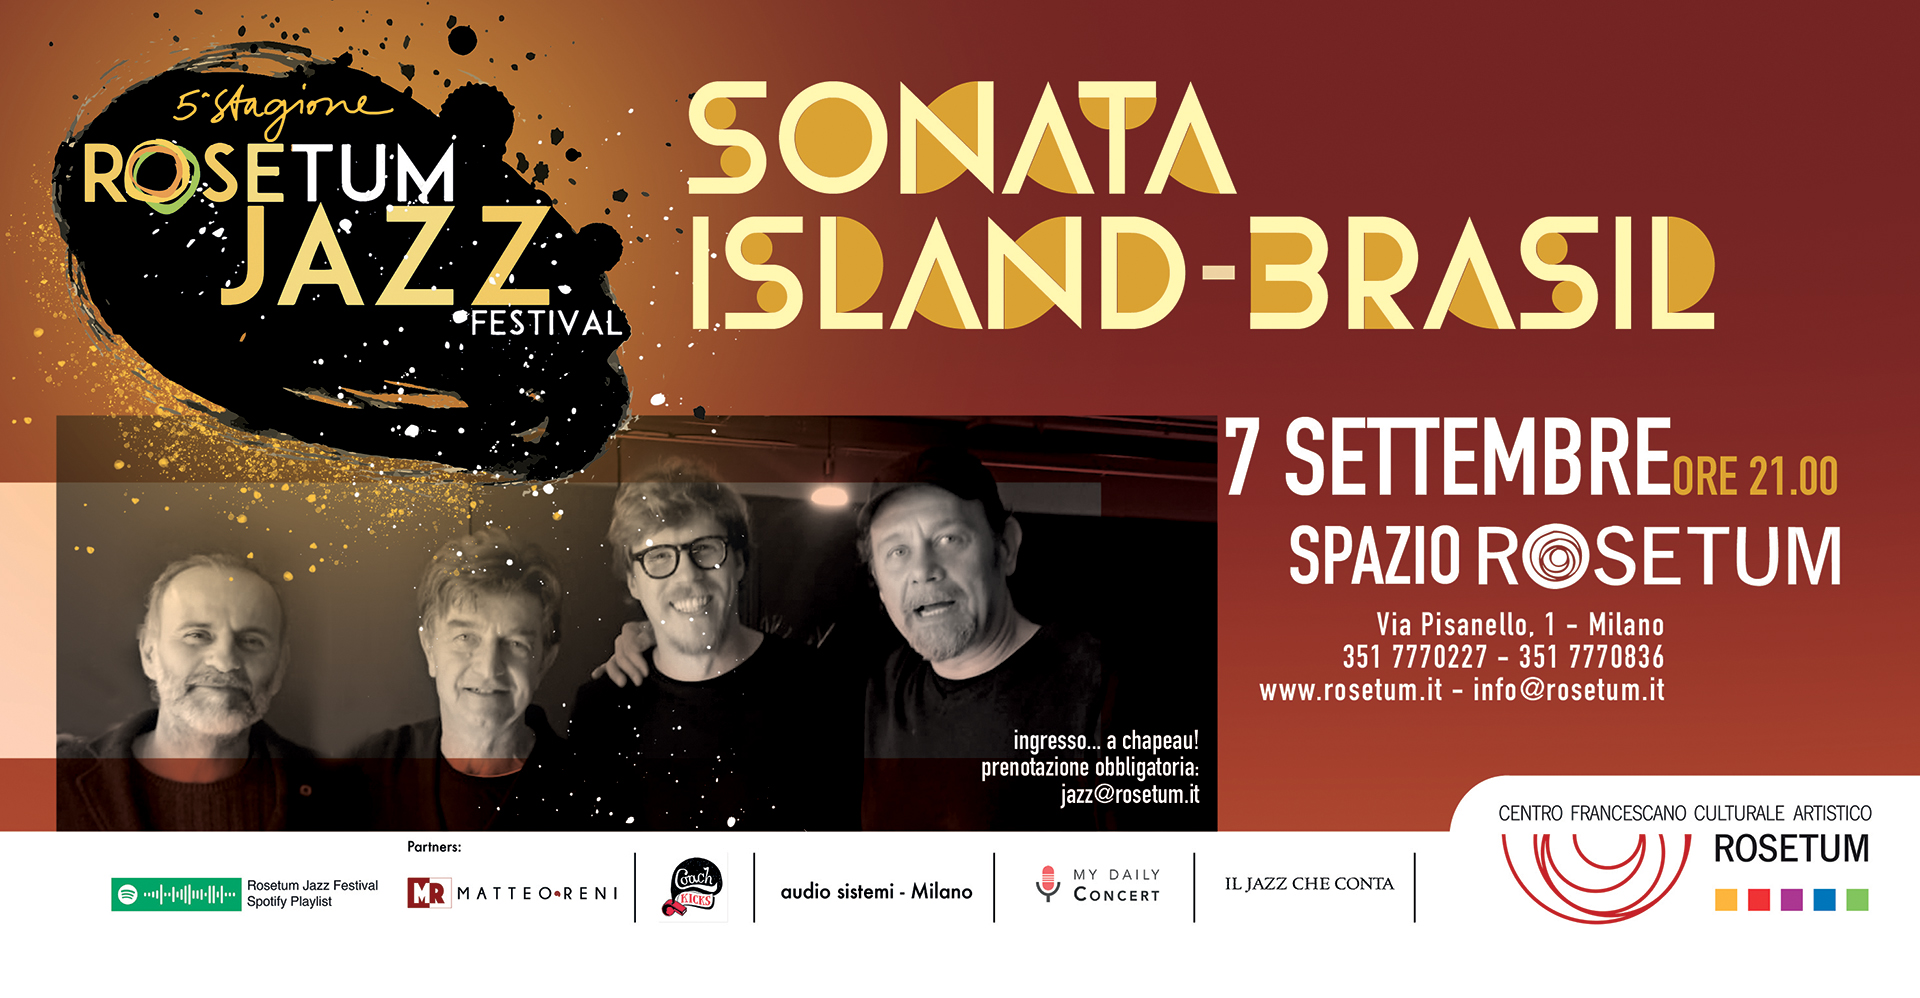 sonata island - brasil